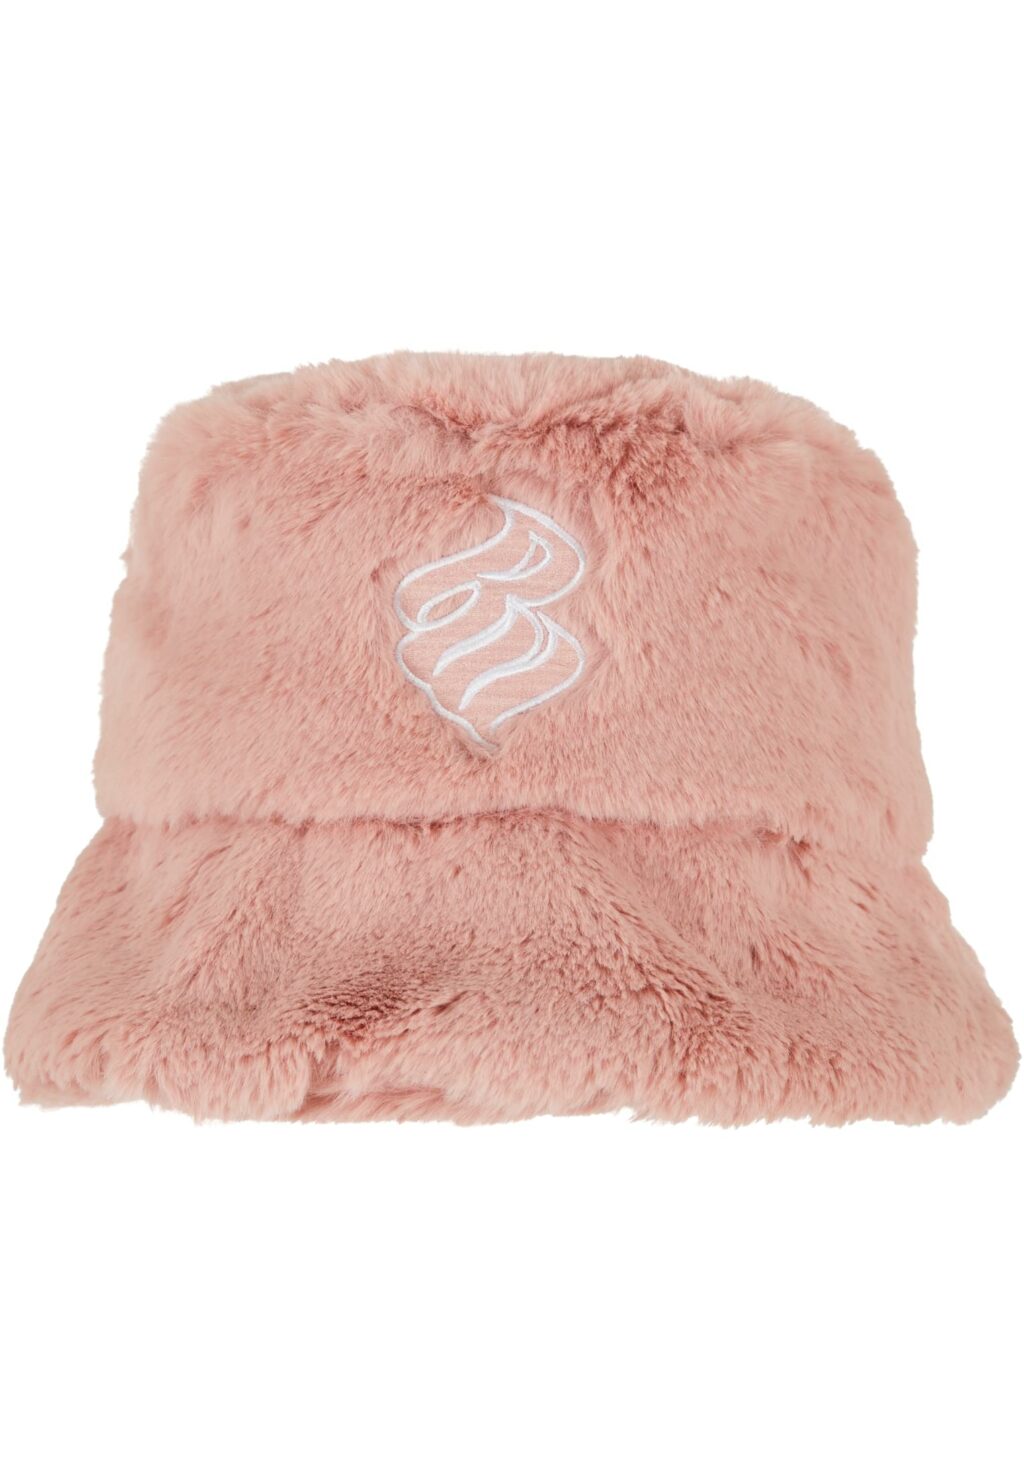 Rocawear Carino Fur Bucket Hat pink one RWLCA002